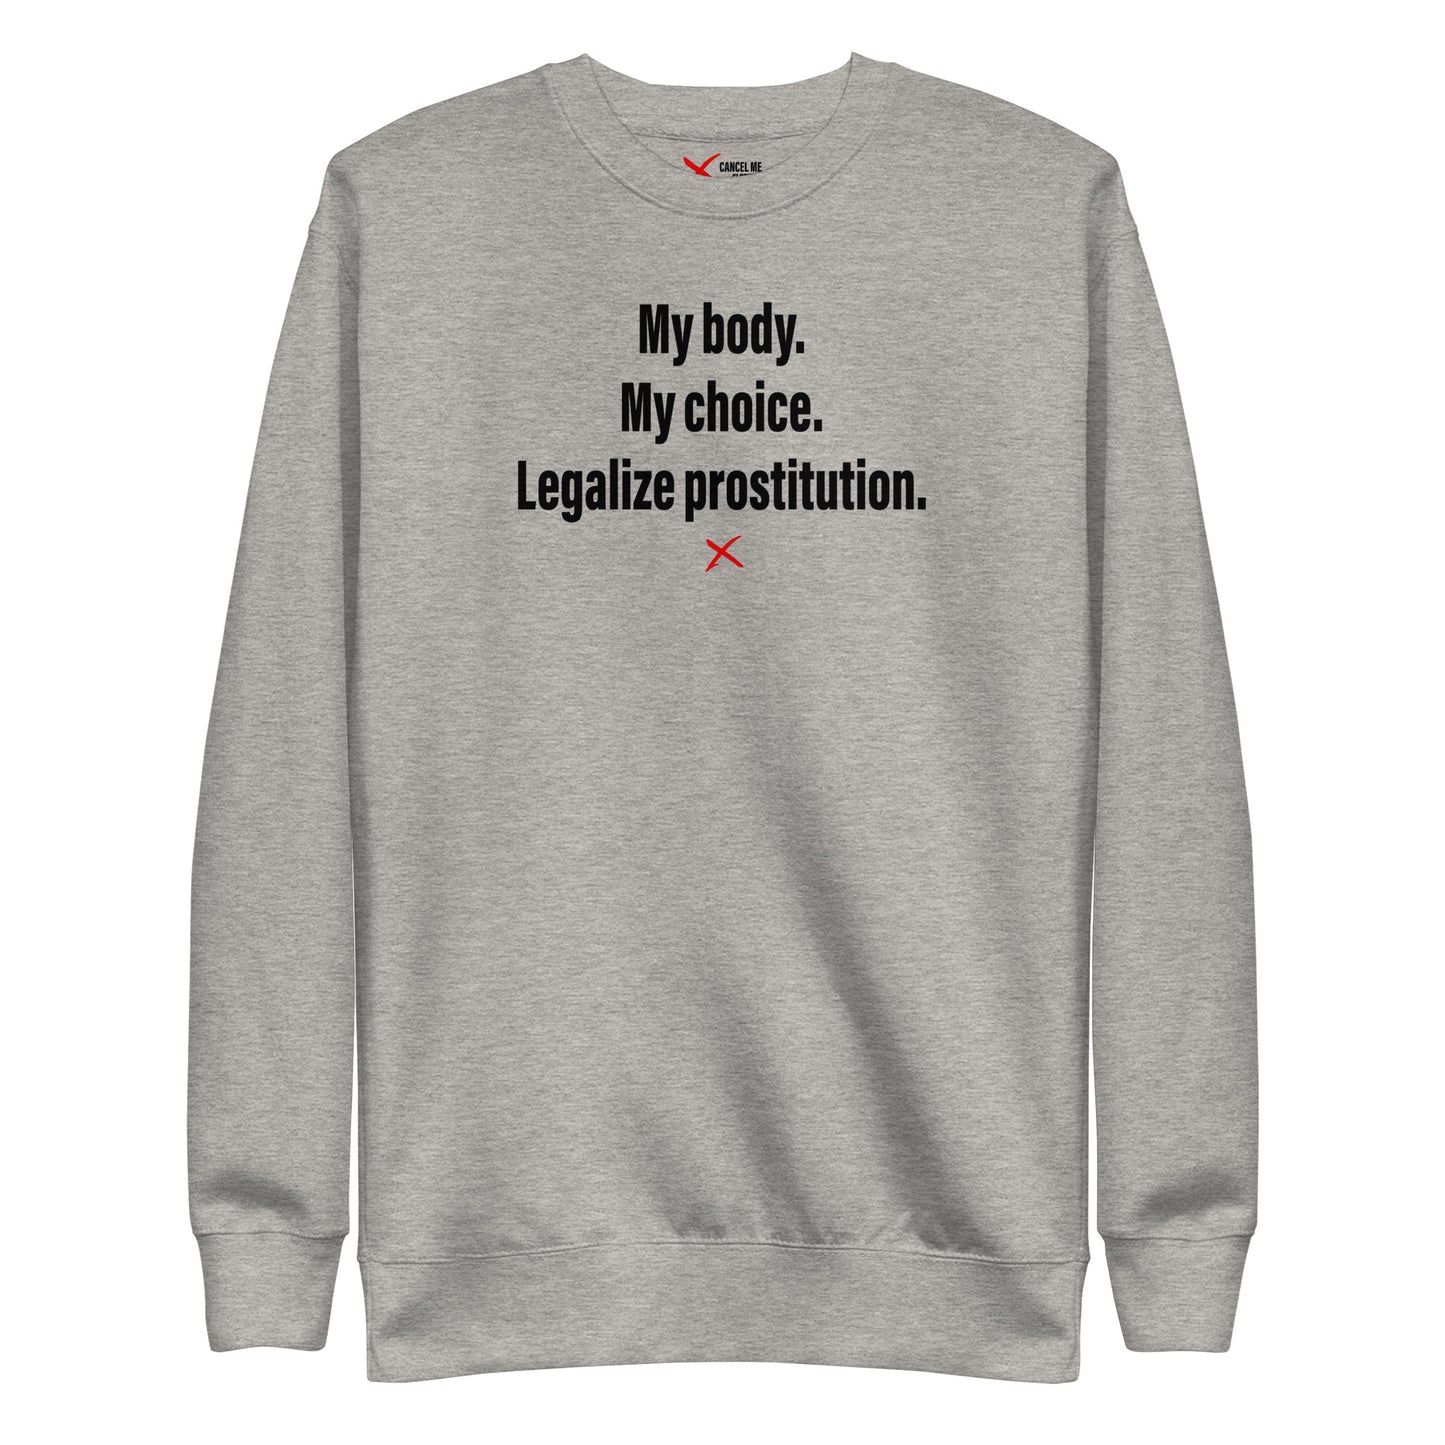 My body. My choice. Legalize prostitution. - Sweatshirt